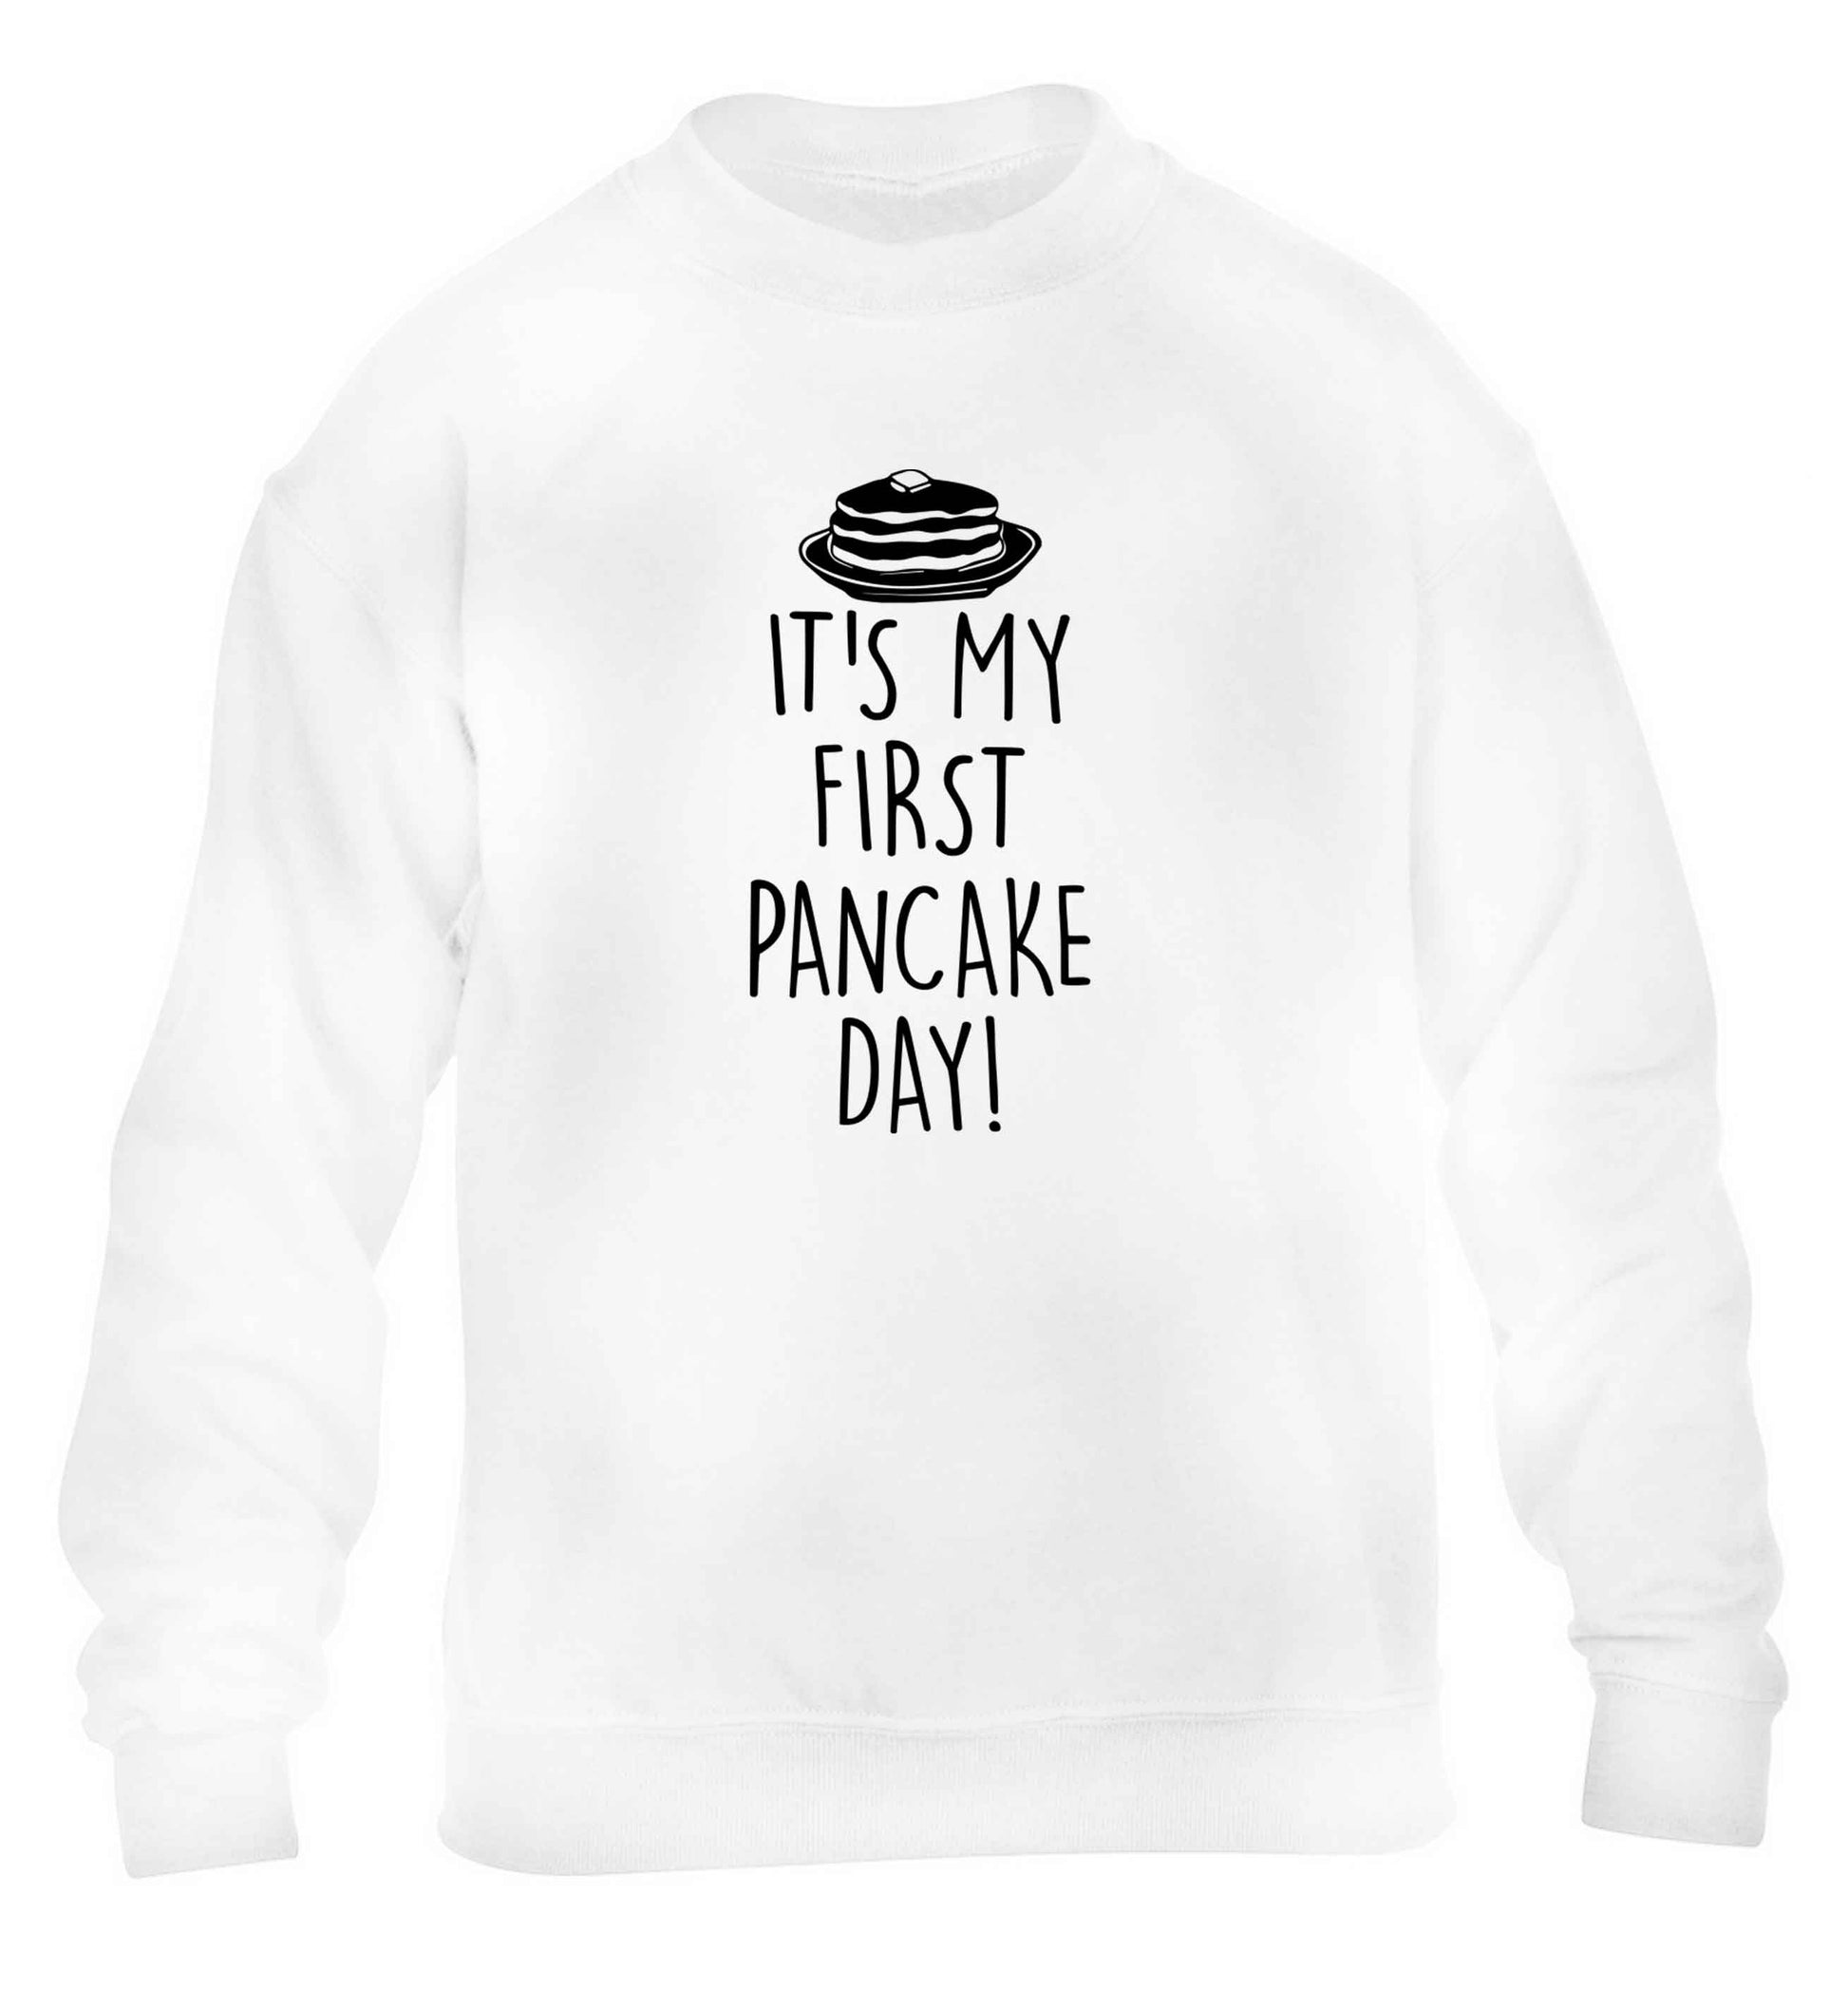 It's my first pancake day children's white sweater 12-13 Years